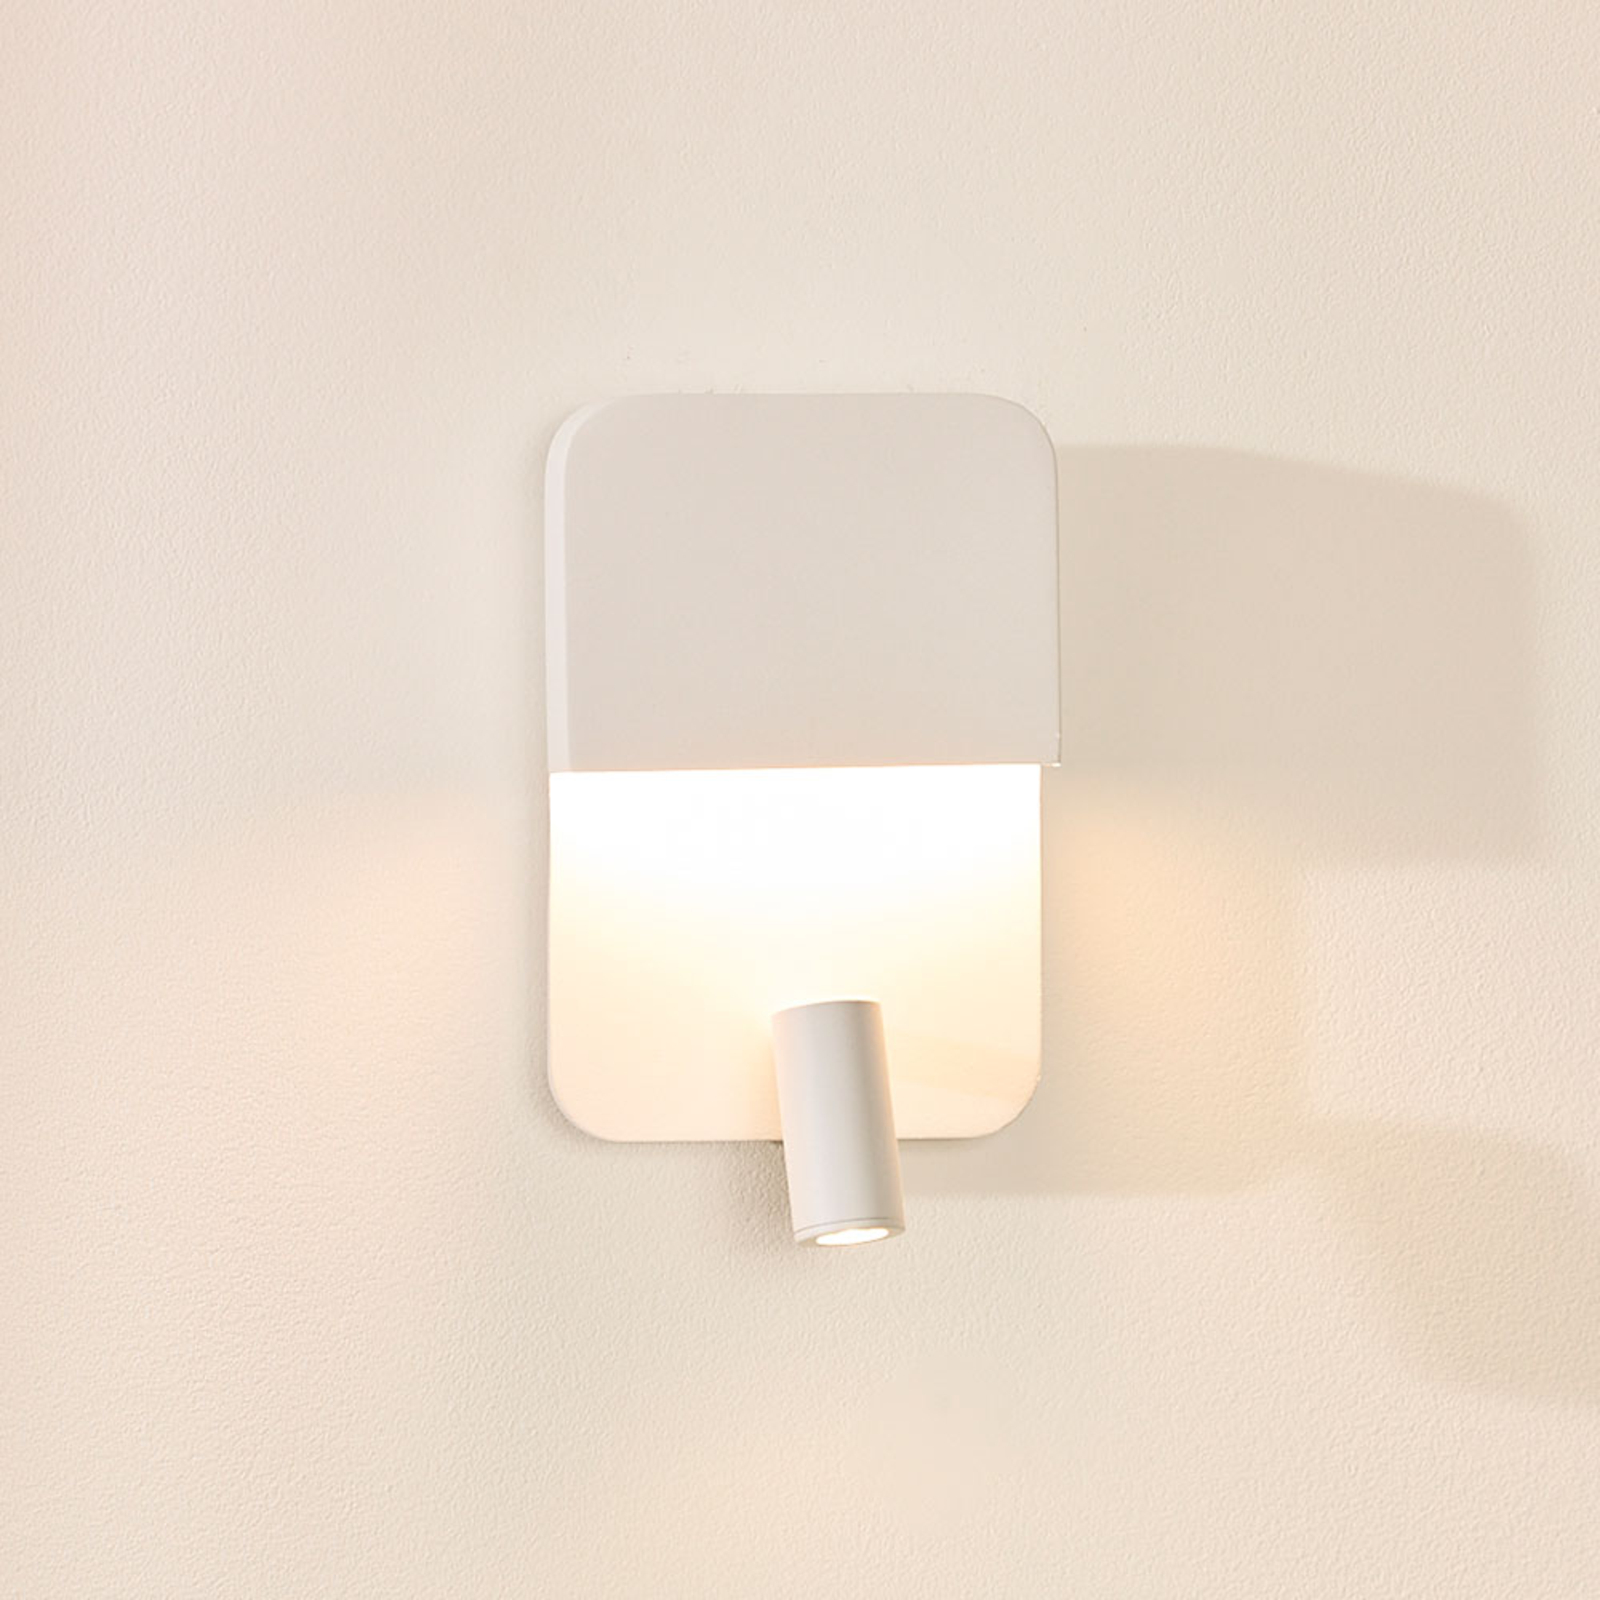 Boxer LED wall light with spotlight, white